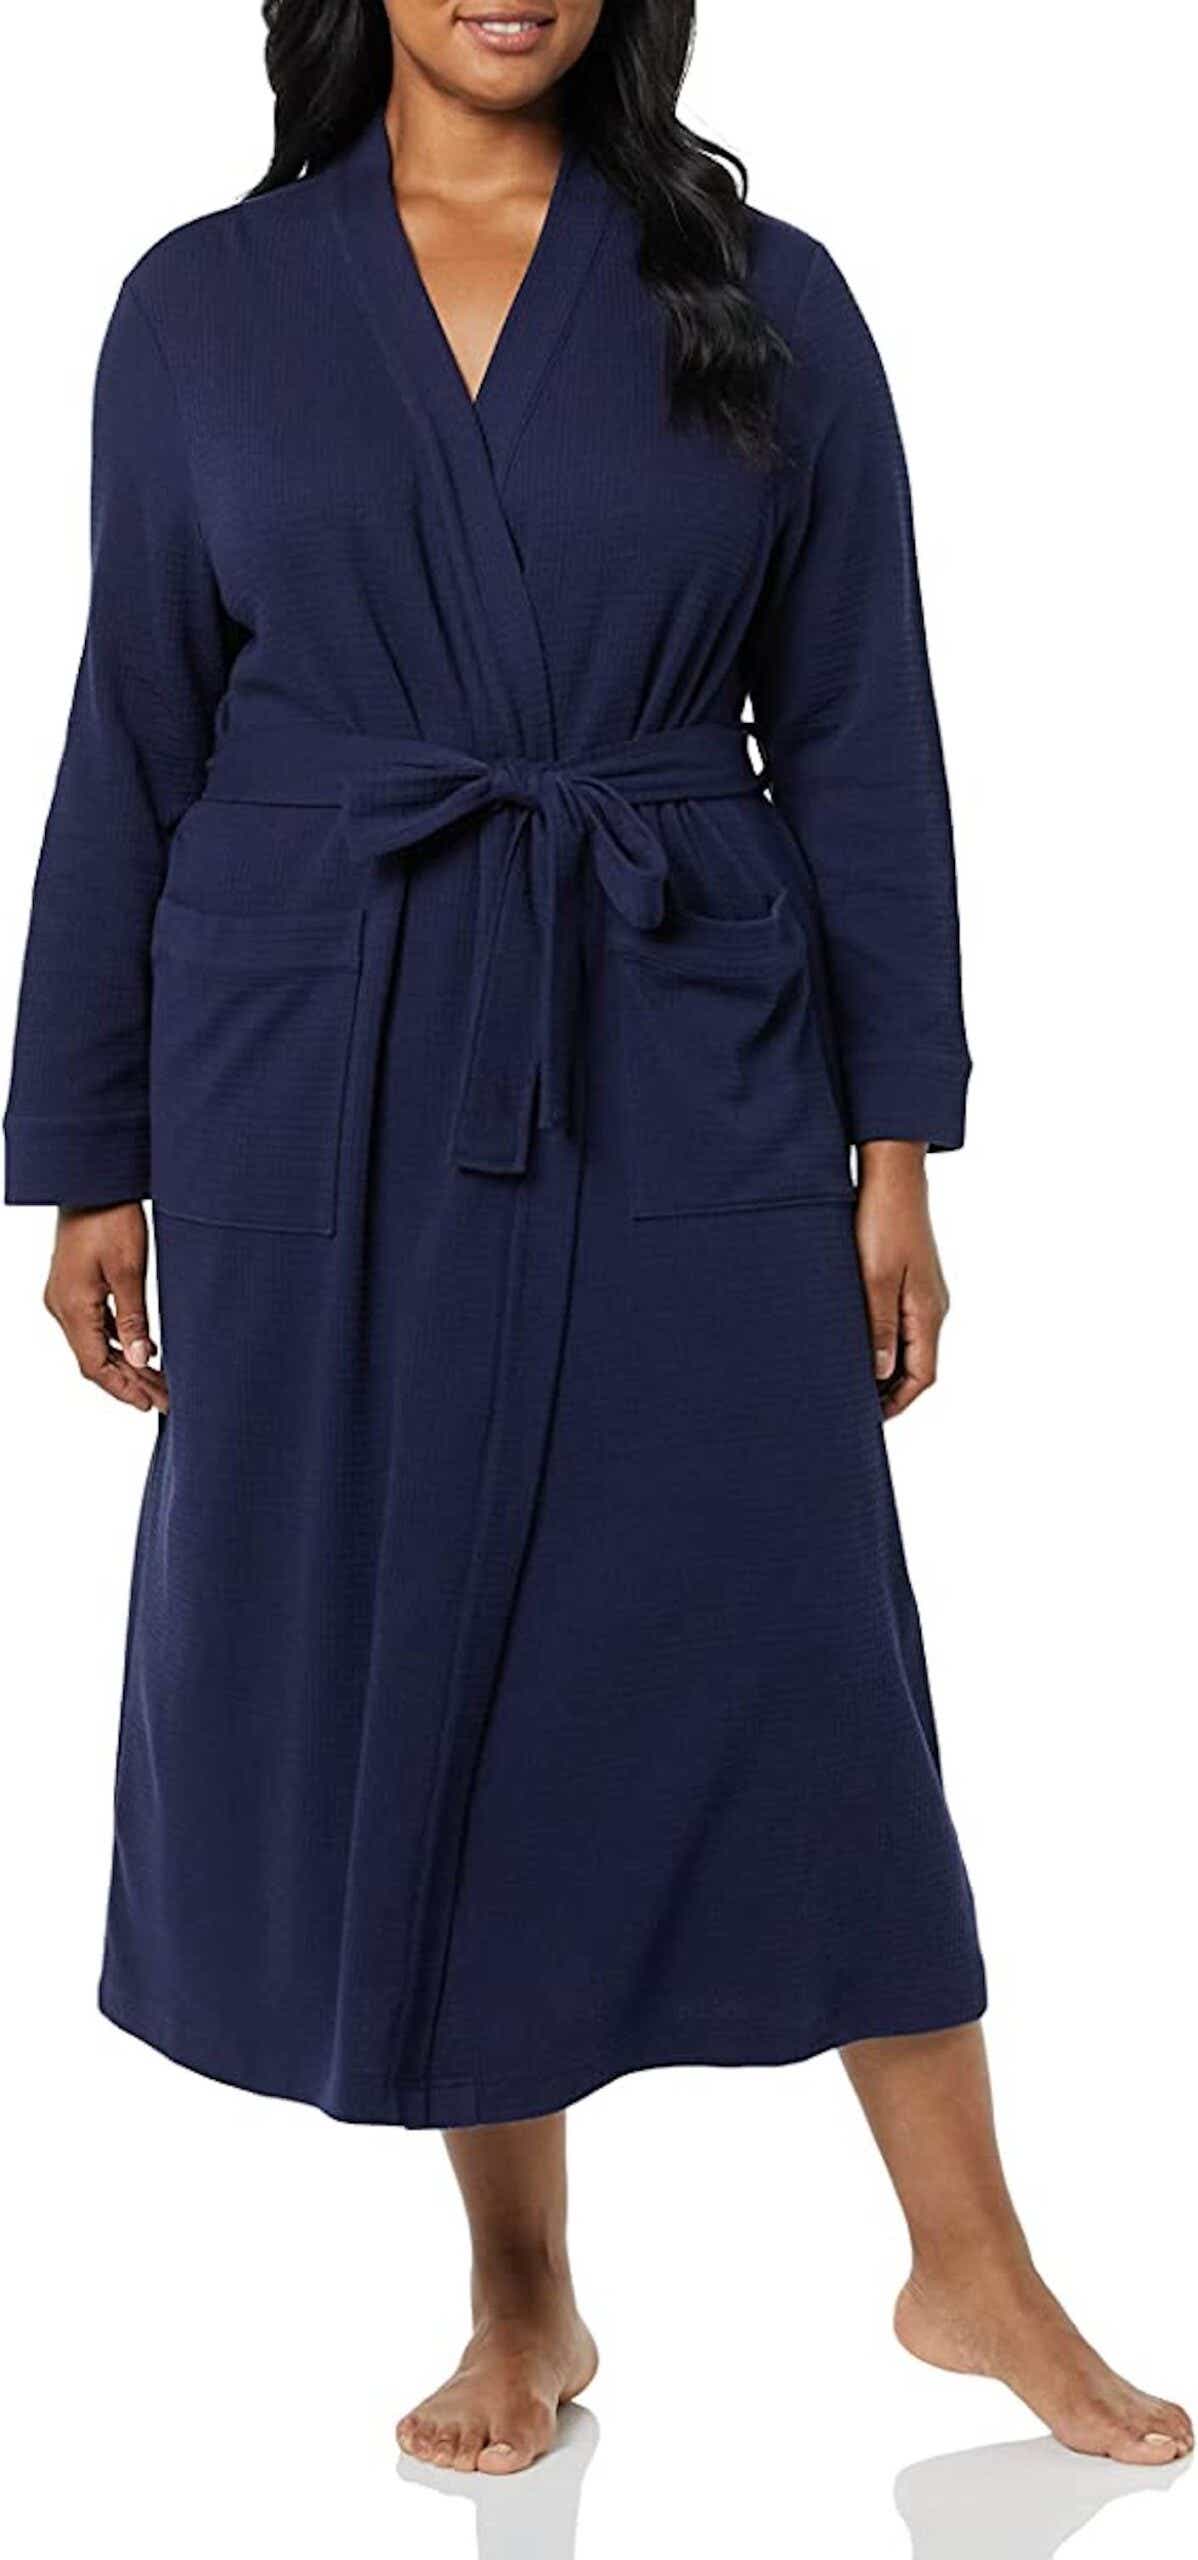 A woman wears a shin-length, navy blue waffle knit robe.